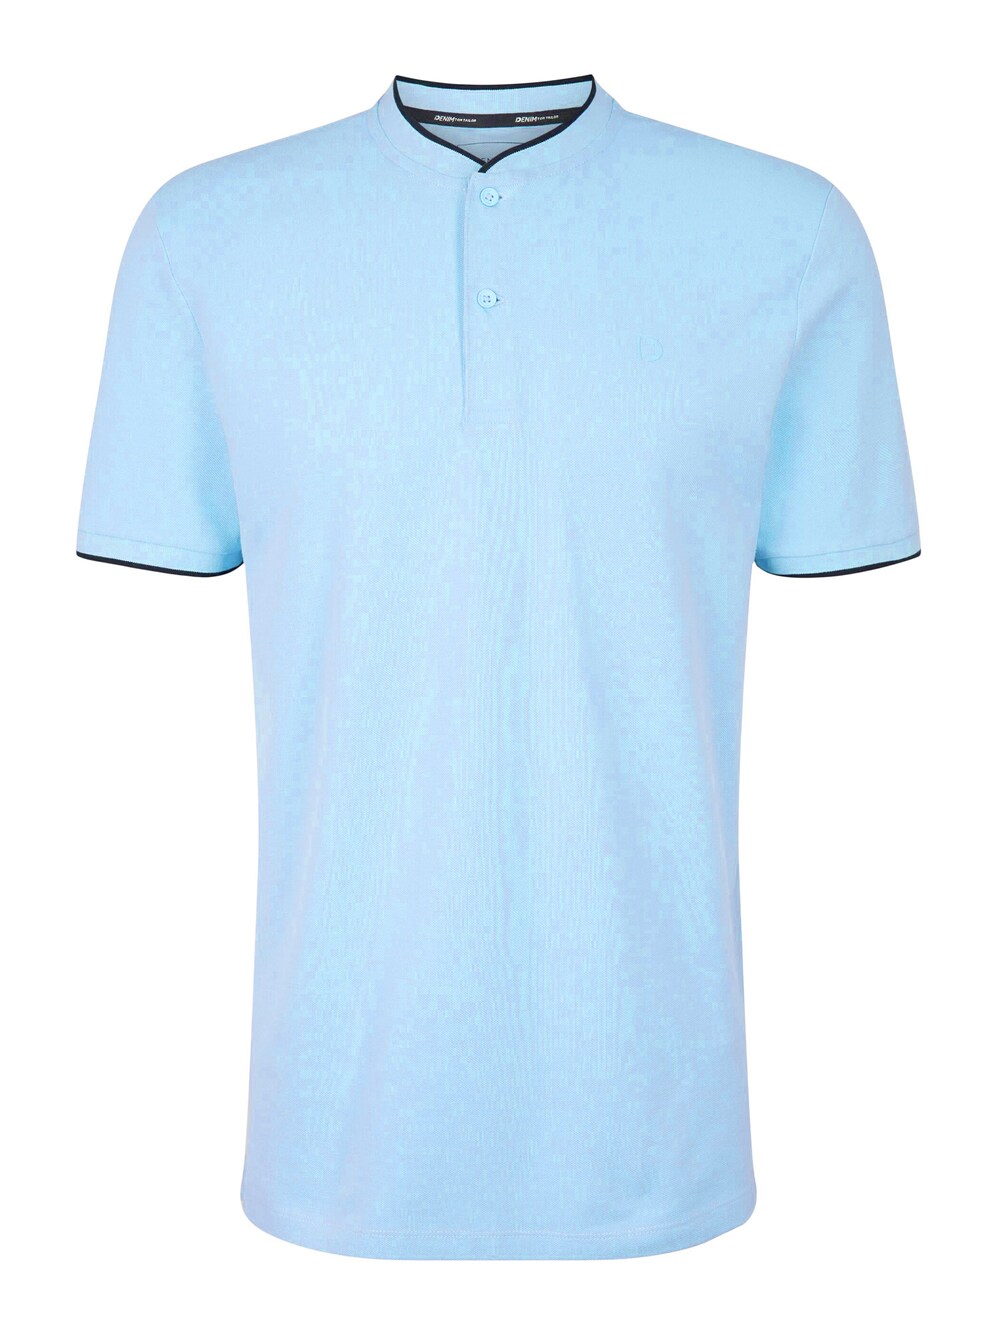 Футболка TOM TAILOR DENIM, темно-синий/светло-голубой футболка tom tailor размер m голубой